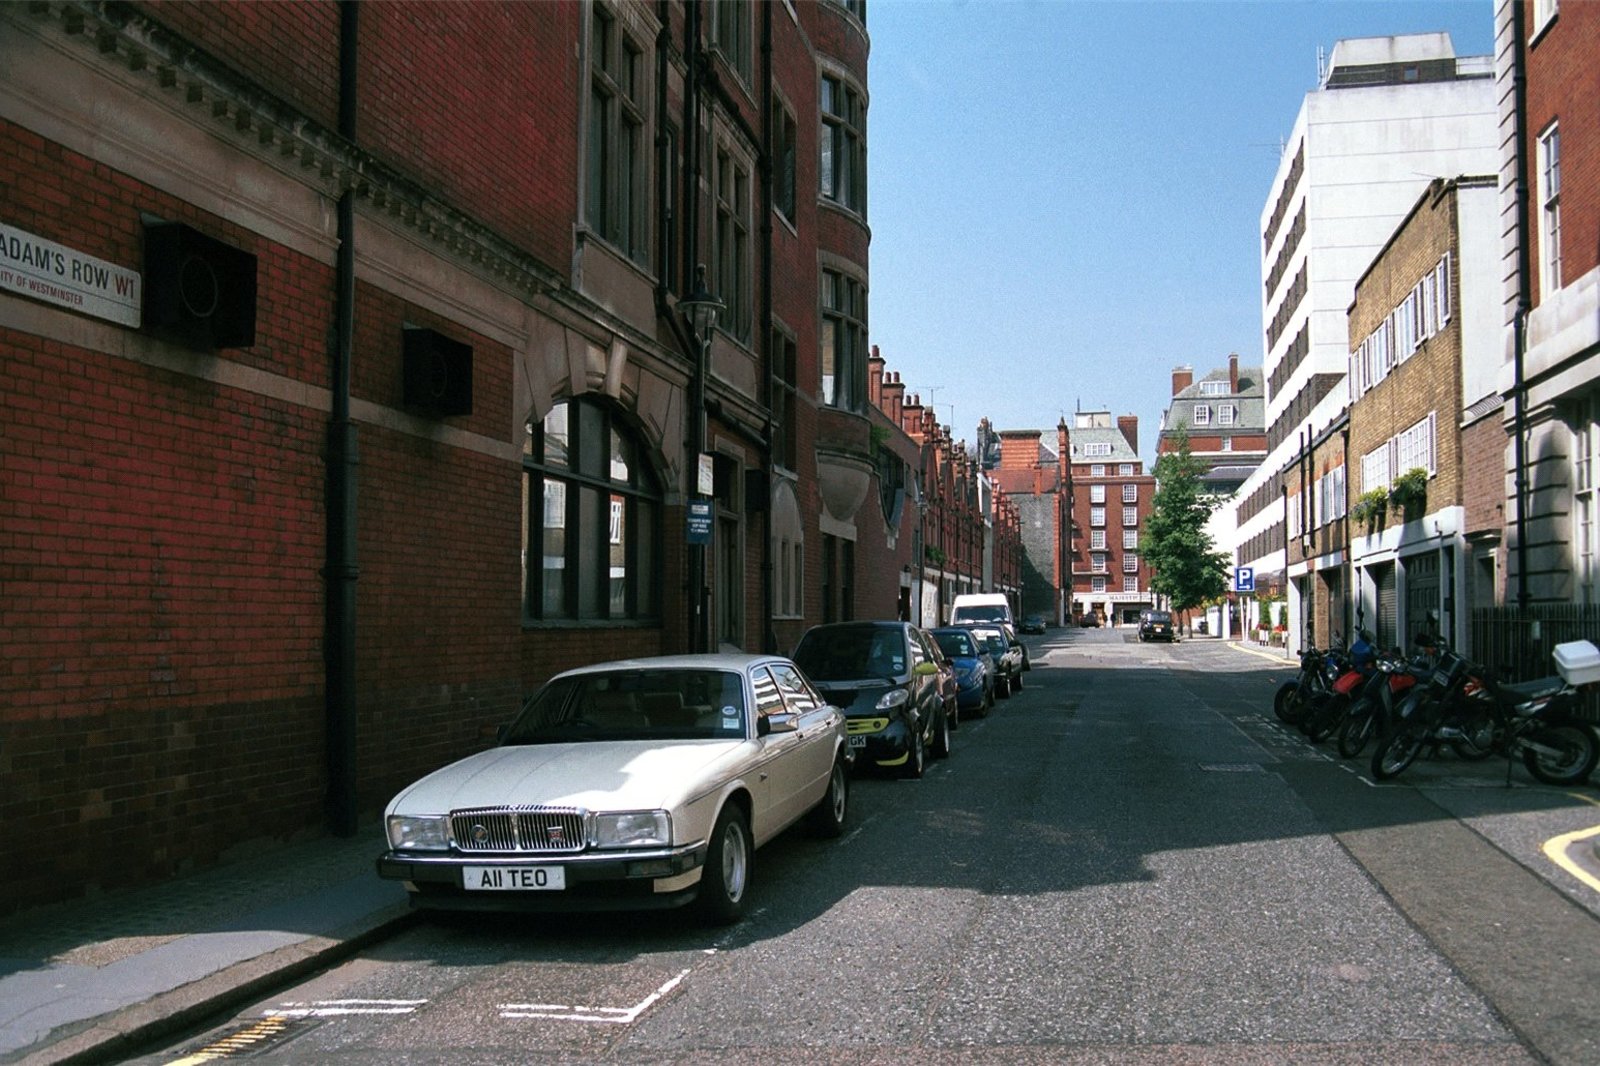 Adams Row, Mayfair, Westminster, London, W1K